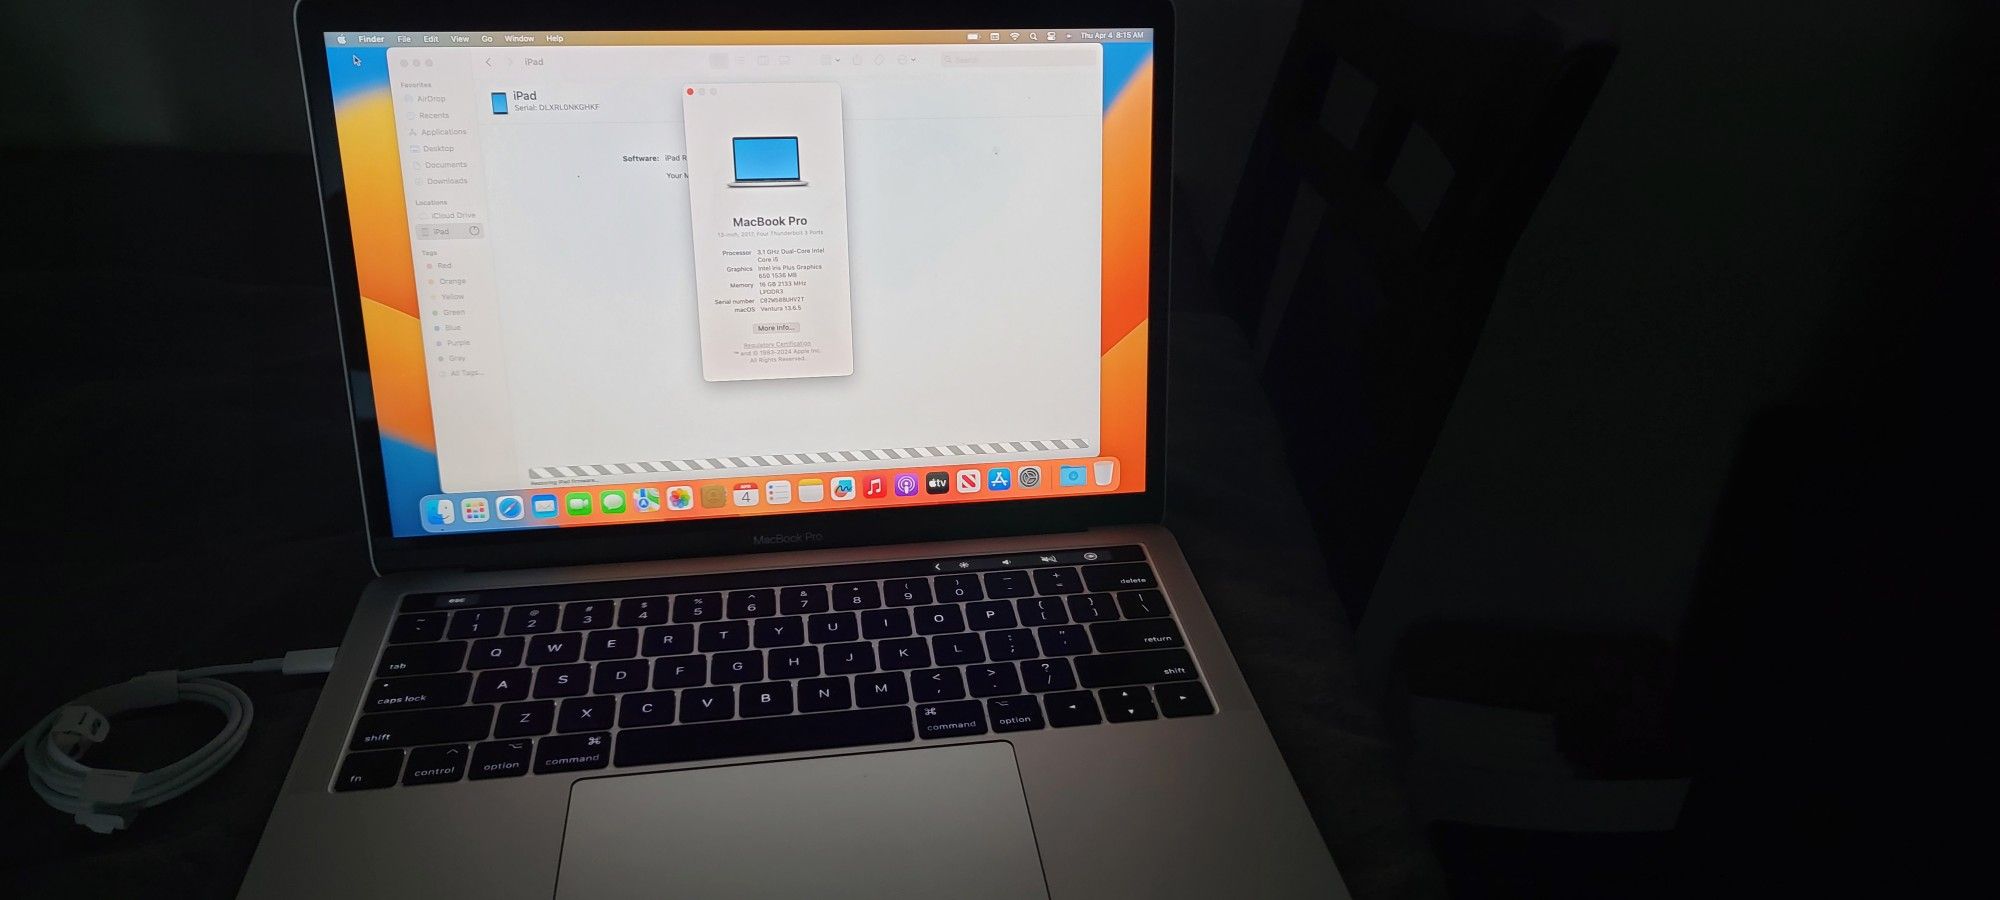 Macbook Pro 13 Inch 2017 3.1ghz i5